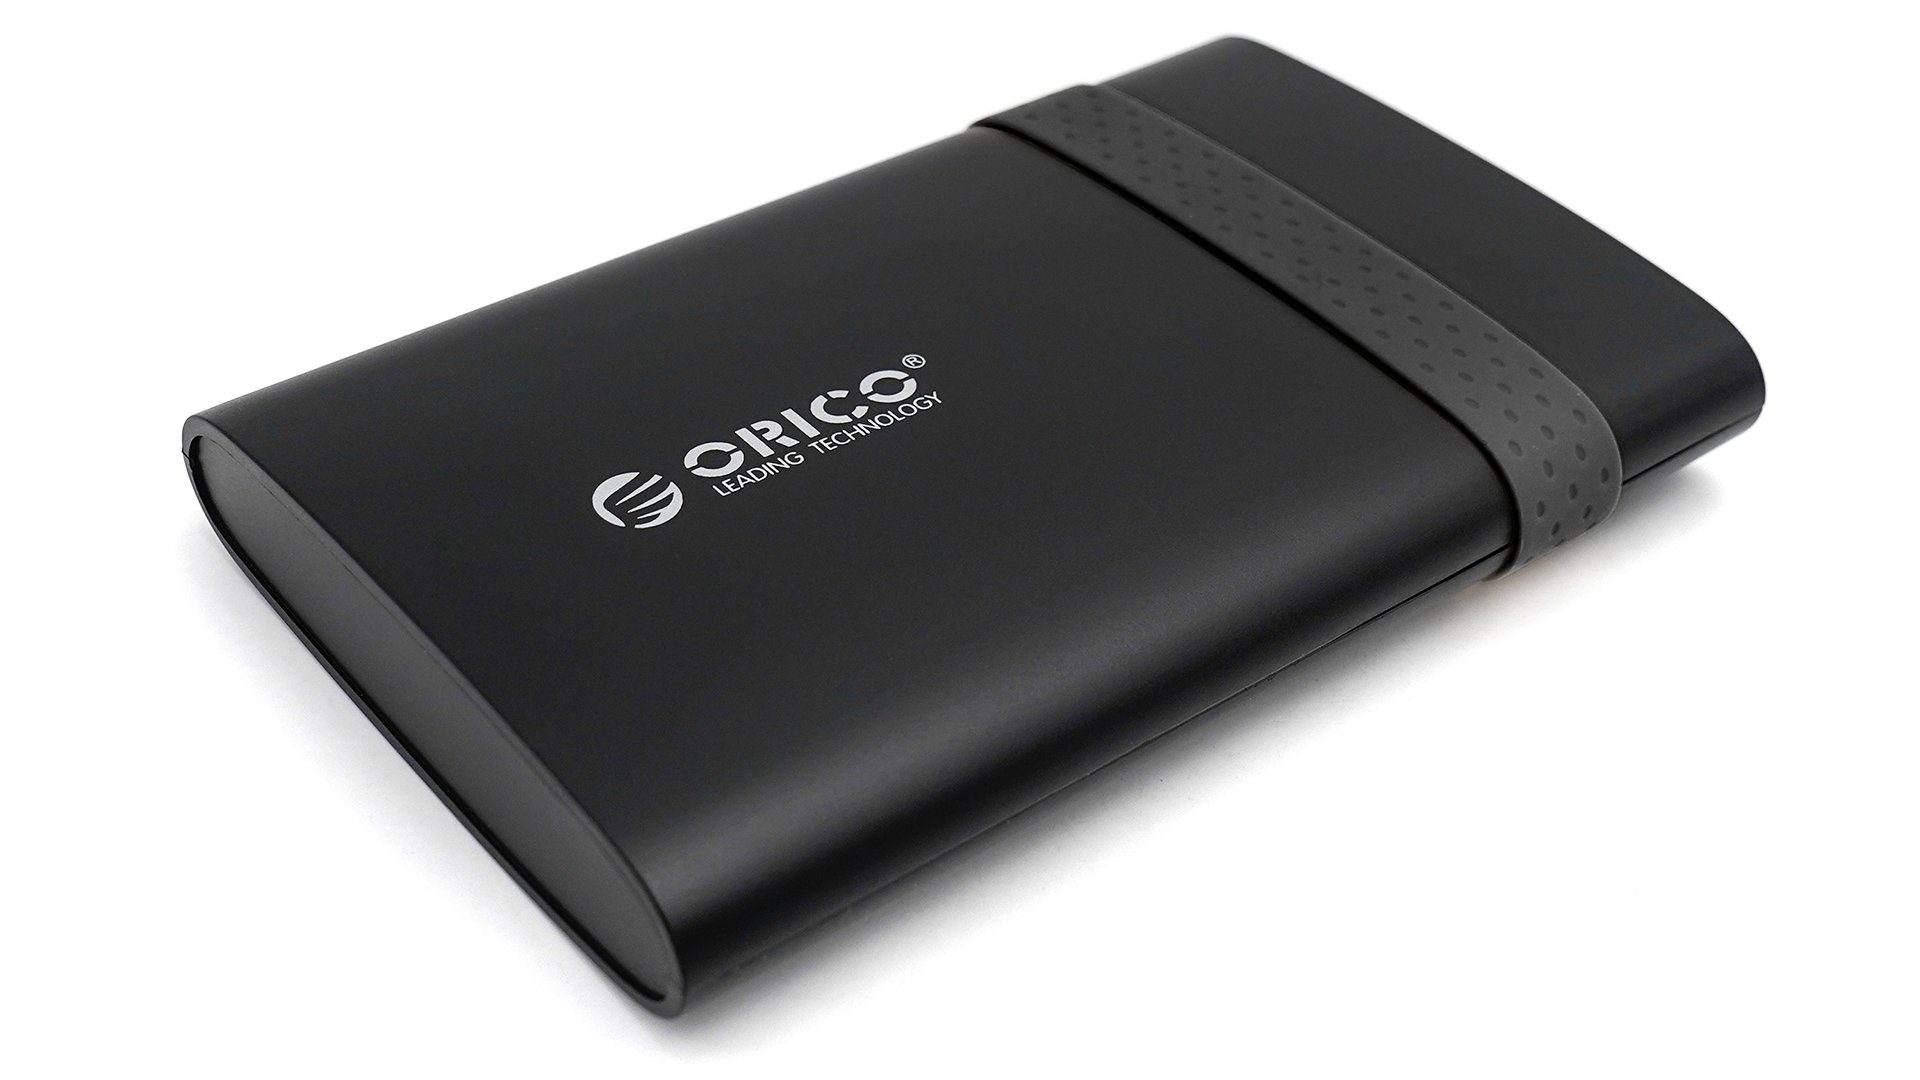 ORICO Orico 320GB USB 3.0 Externe 2.5" Festplatte 2538U3 - schwarz externe HDD-Festplatte (320GB) 2.5", für Fotos smart TV PC Mac Laptop Computer ps4 ps5 Xbox